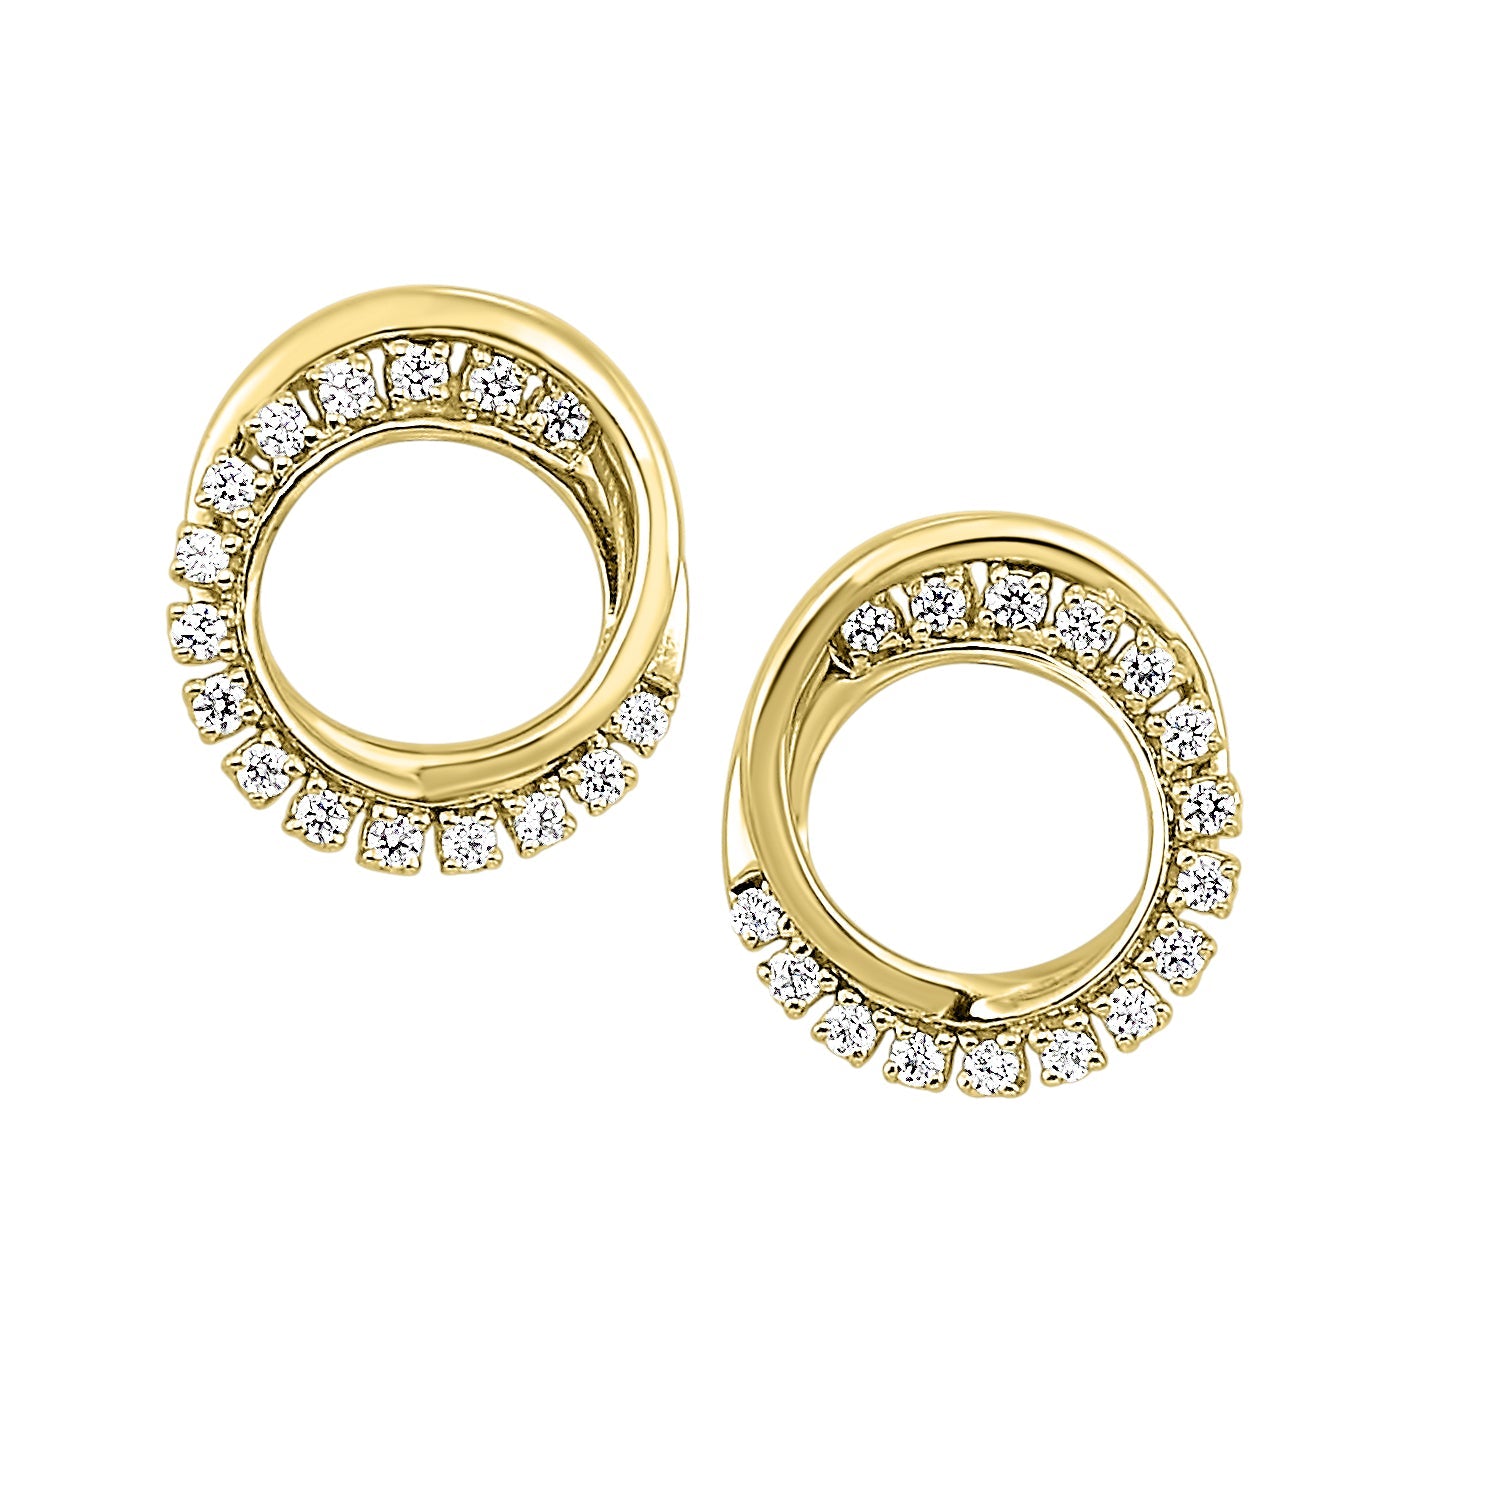 10kt yellow gold diamond 1/6ctw earring